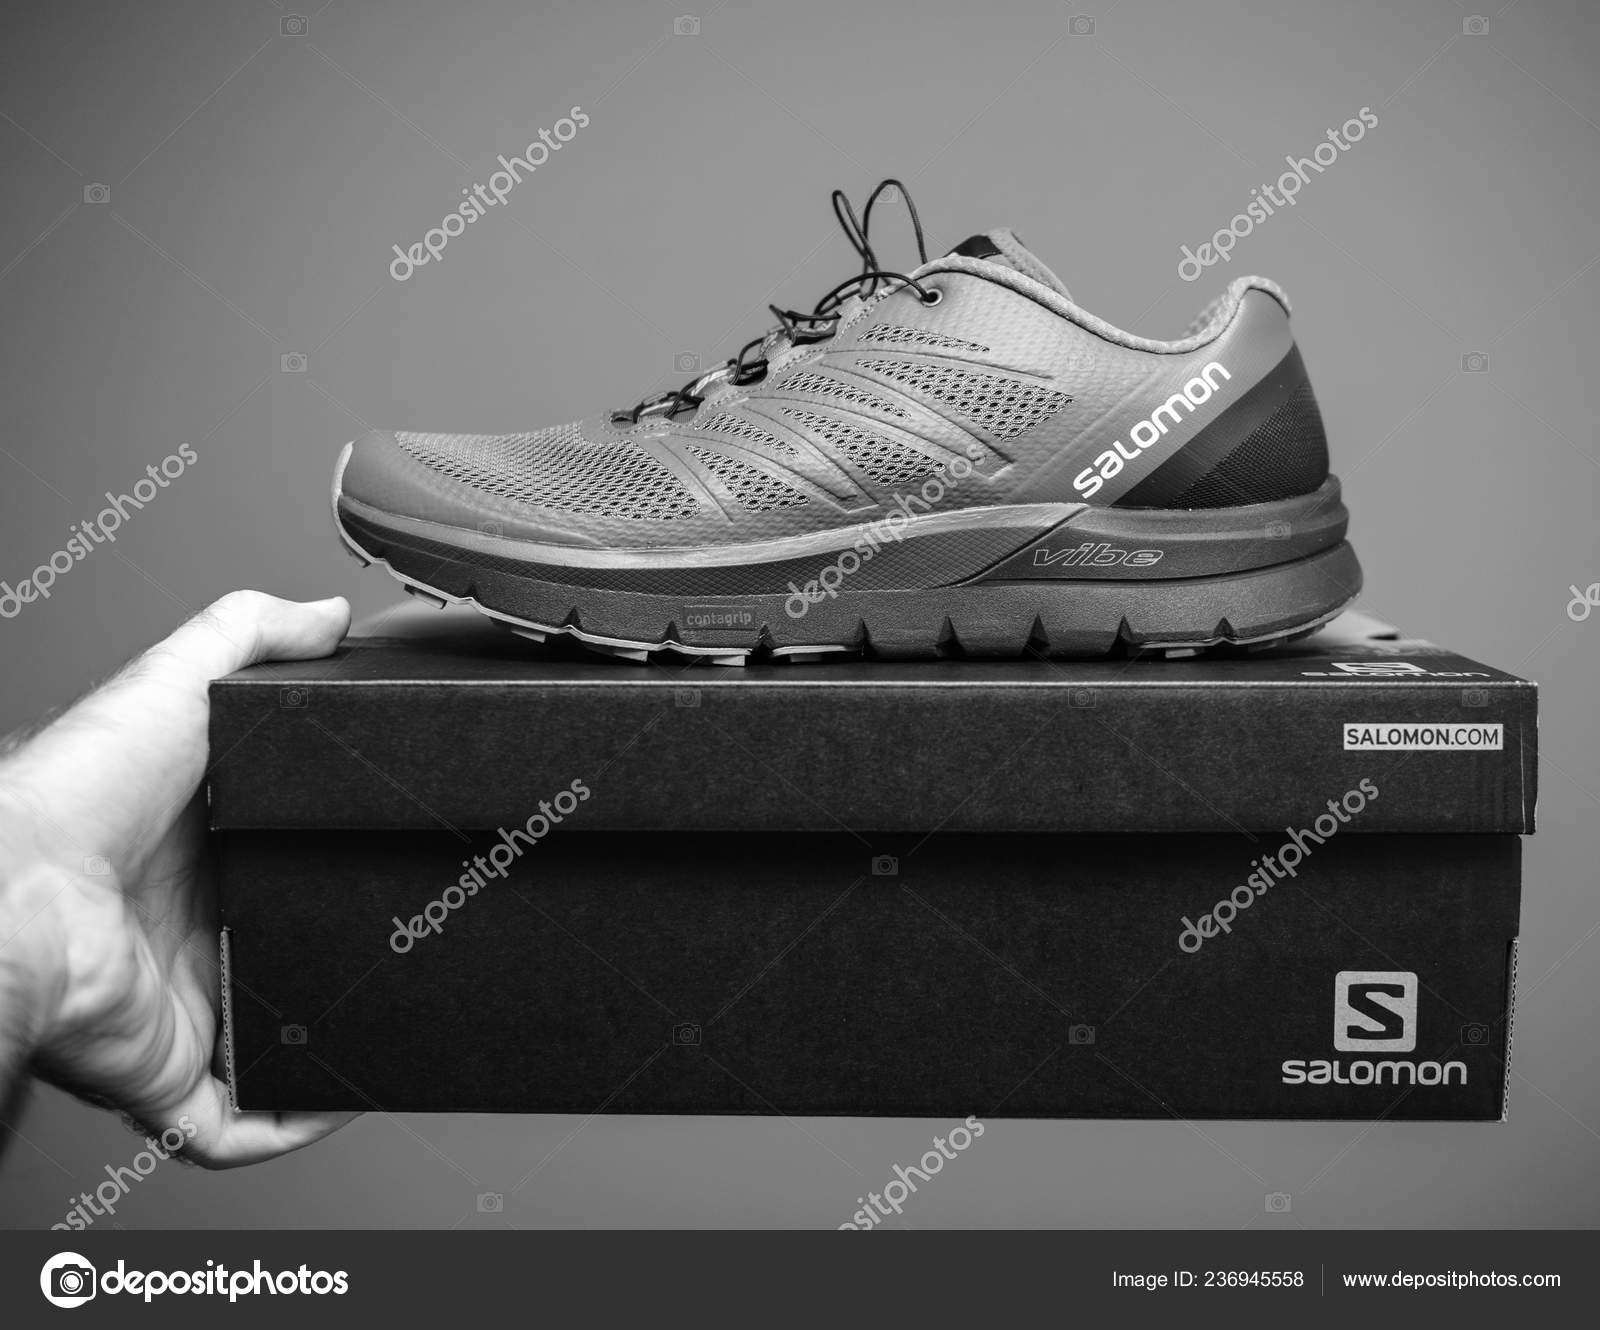 salomon sense pro max trail running shoes